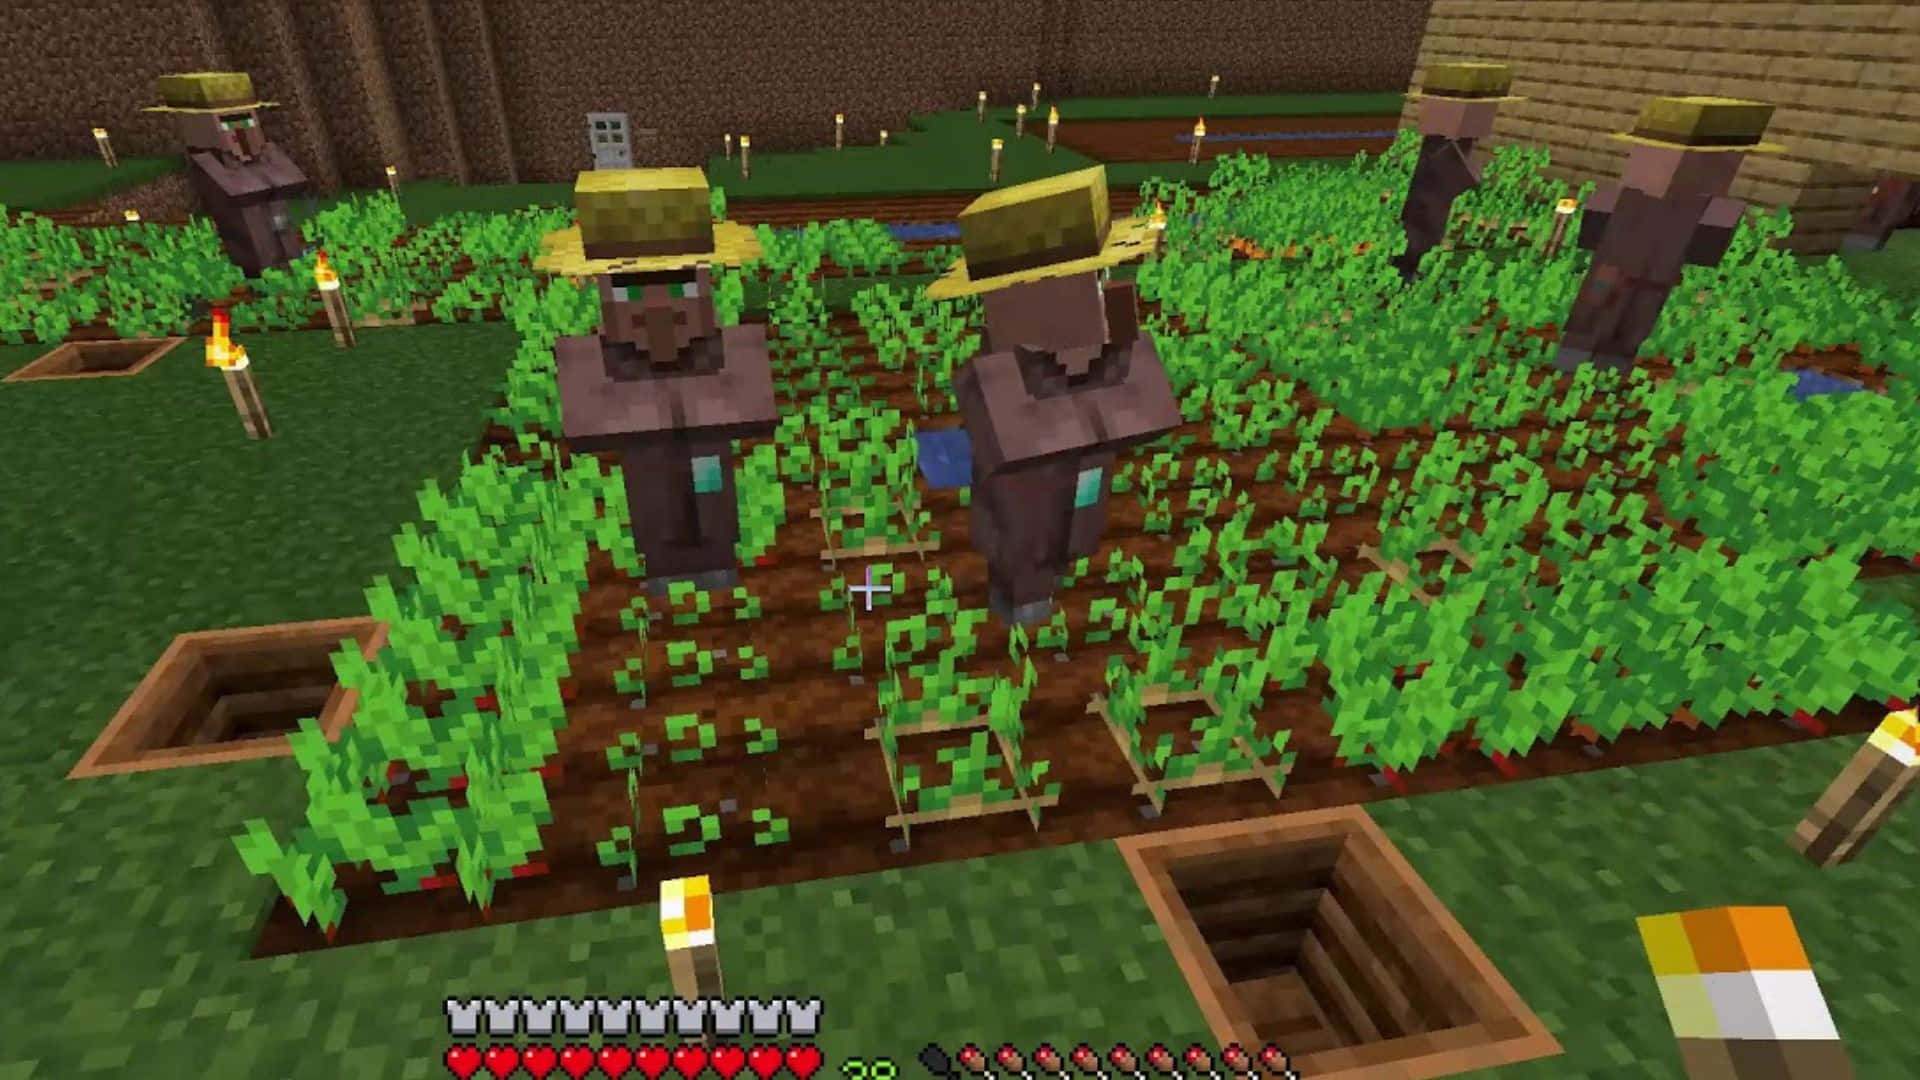 Extra villages. Minecraft Villager Farm. Размножение жителей майнкрафт. Как размножать жителей в МАЙНКРАФТЕ. Minecraft Villager grow fast.